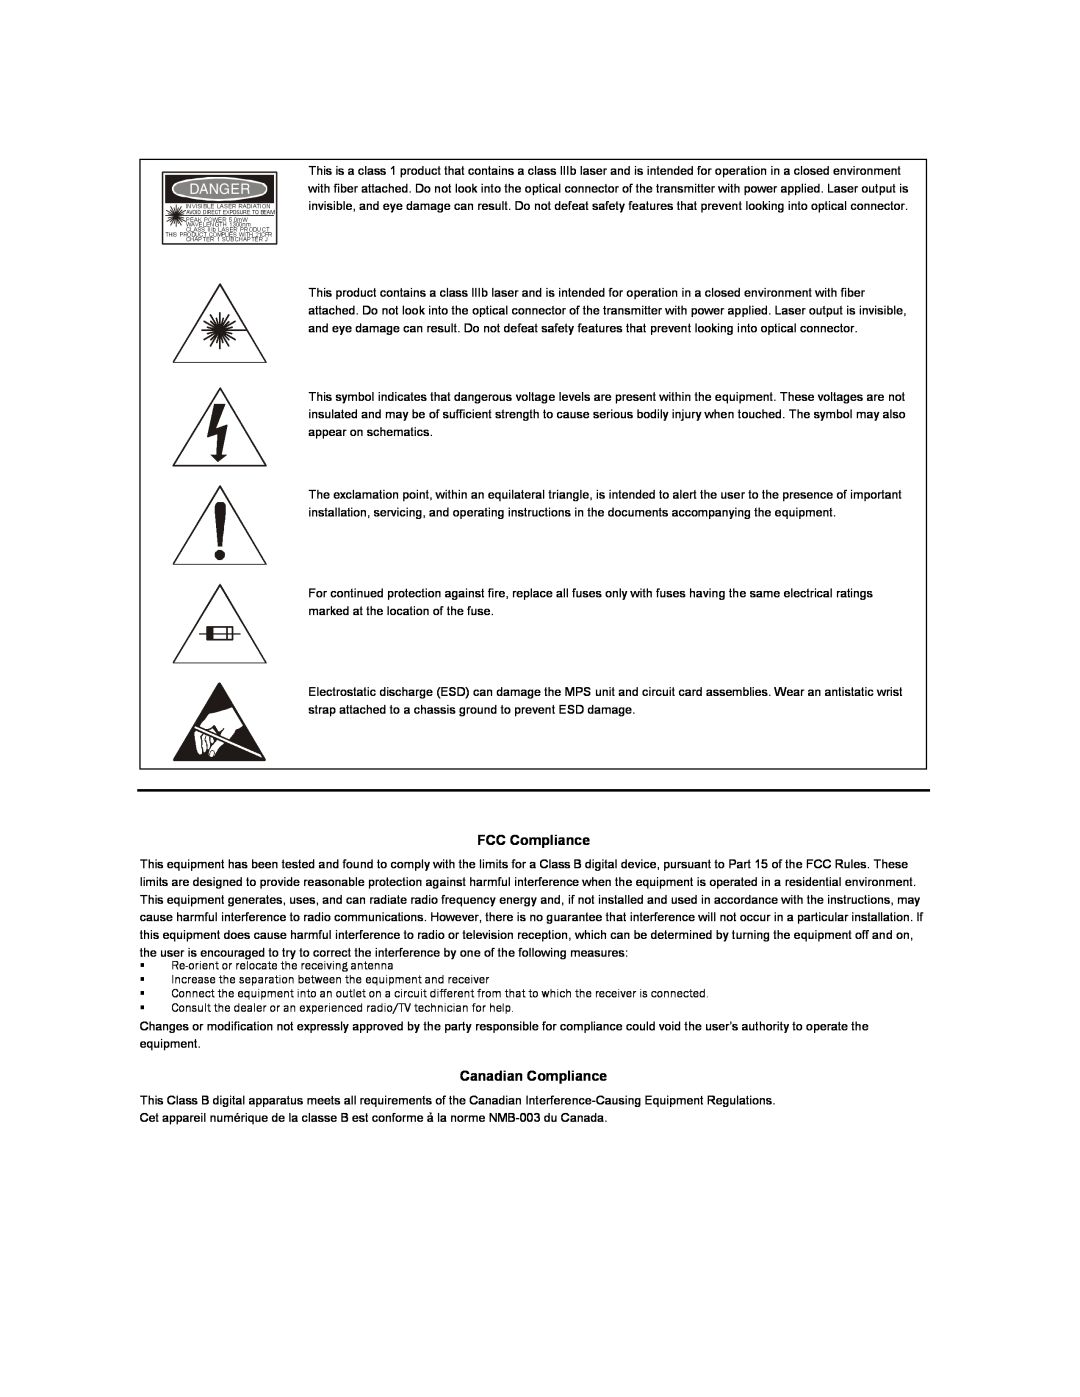 Cuisinart SG2-DRT-3X operation manual Danger, FCC Compliance, Canadian Compliance 